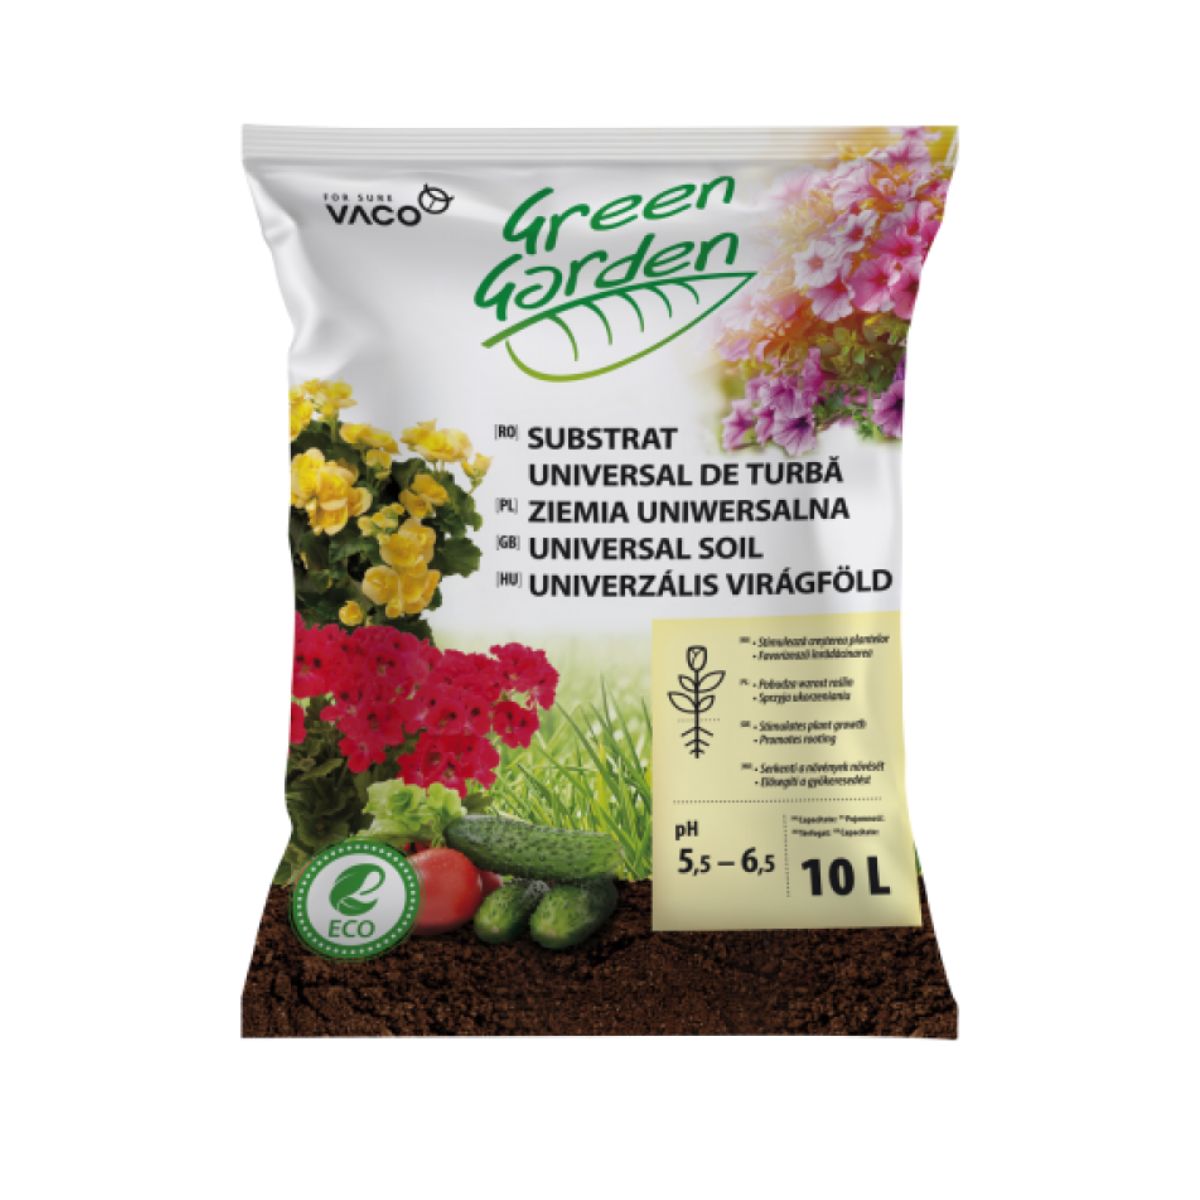 Pamant, turba & substraturi - Substrat universal de turba pentru semanat si plantat, 5 litri, hectarul.ro